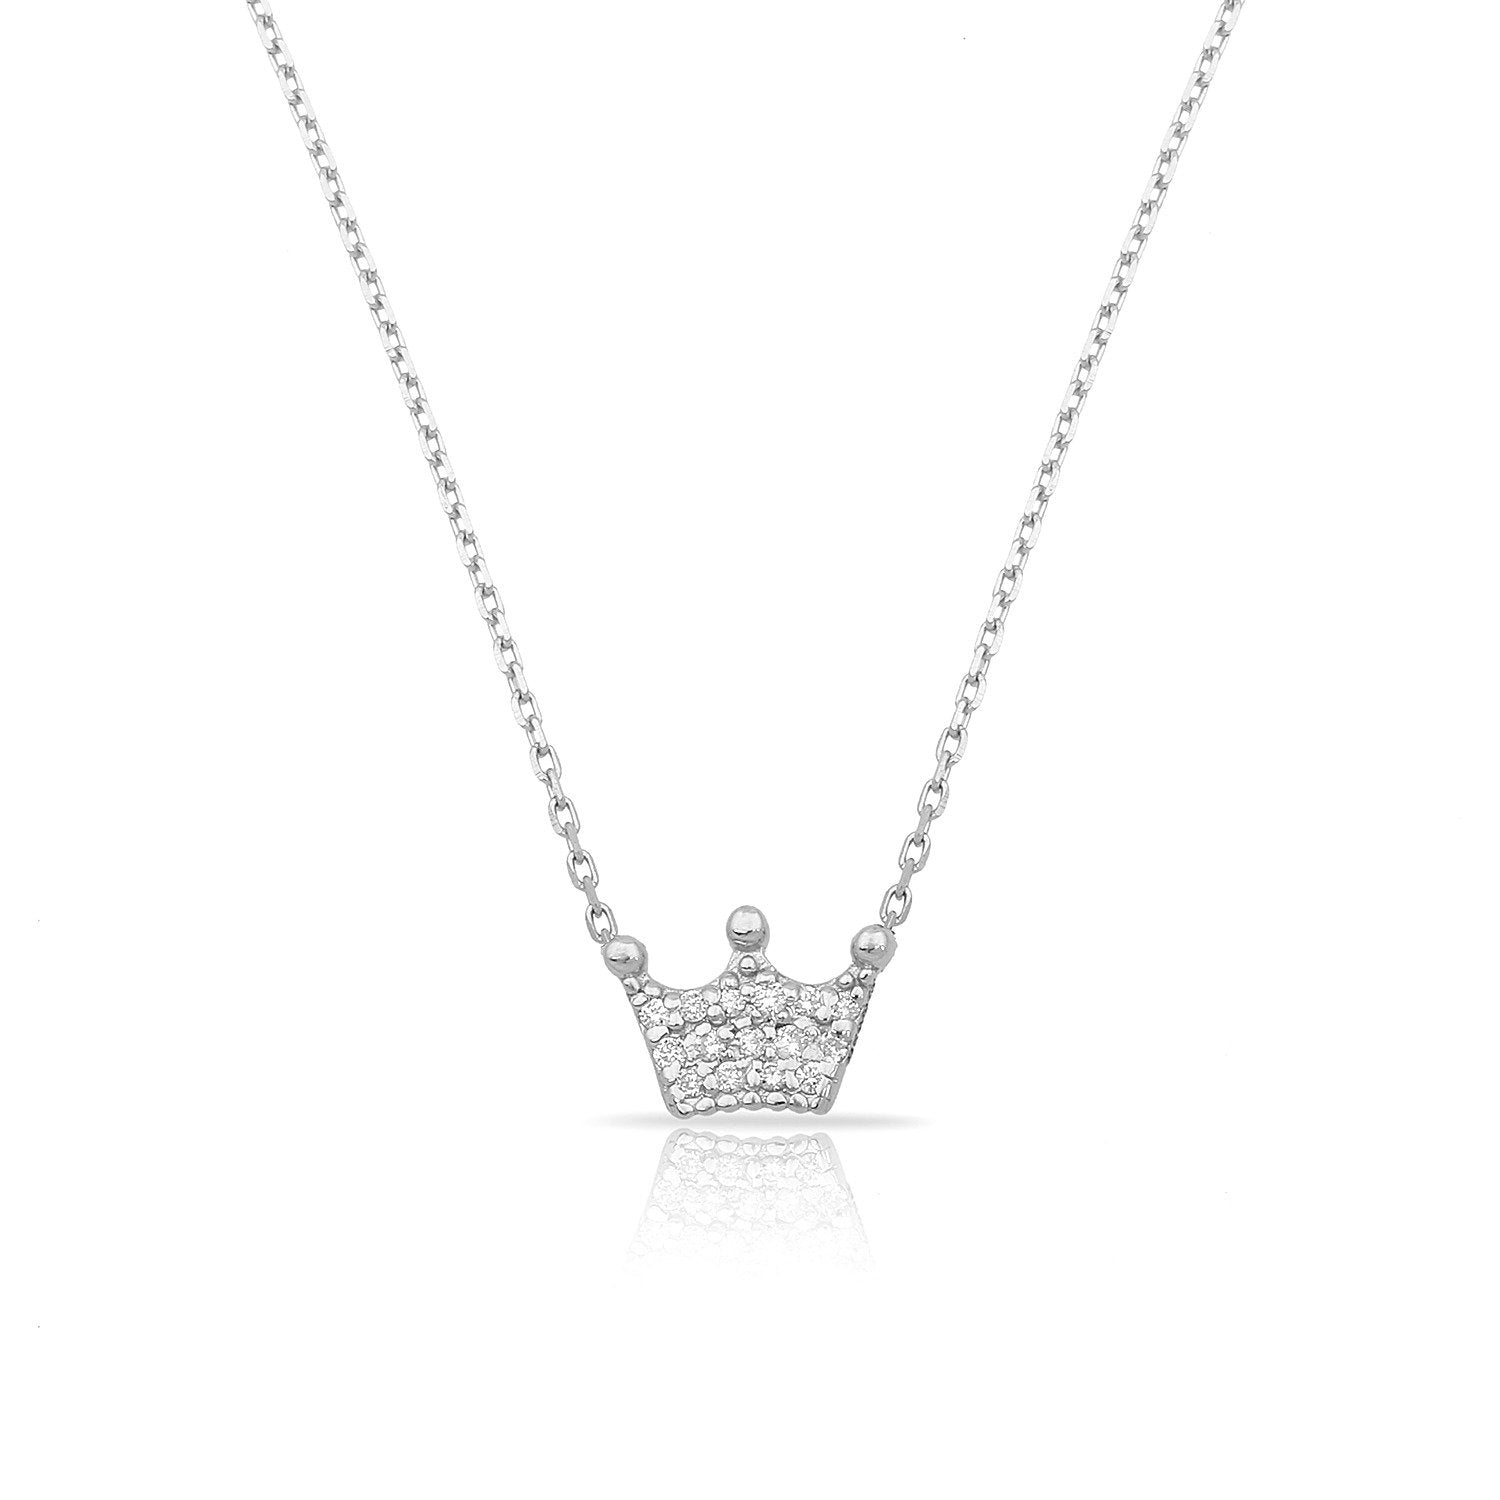 TSK Diamond Crown Necklace JEWELRY The Sis Kiss 14k White Gold